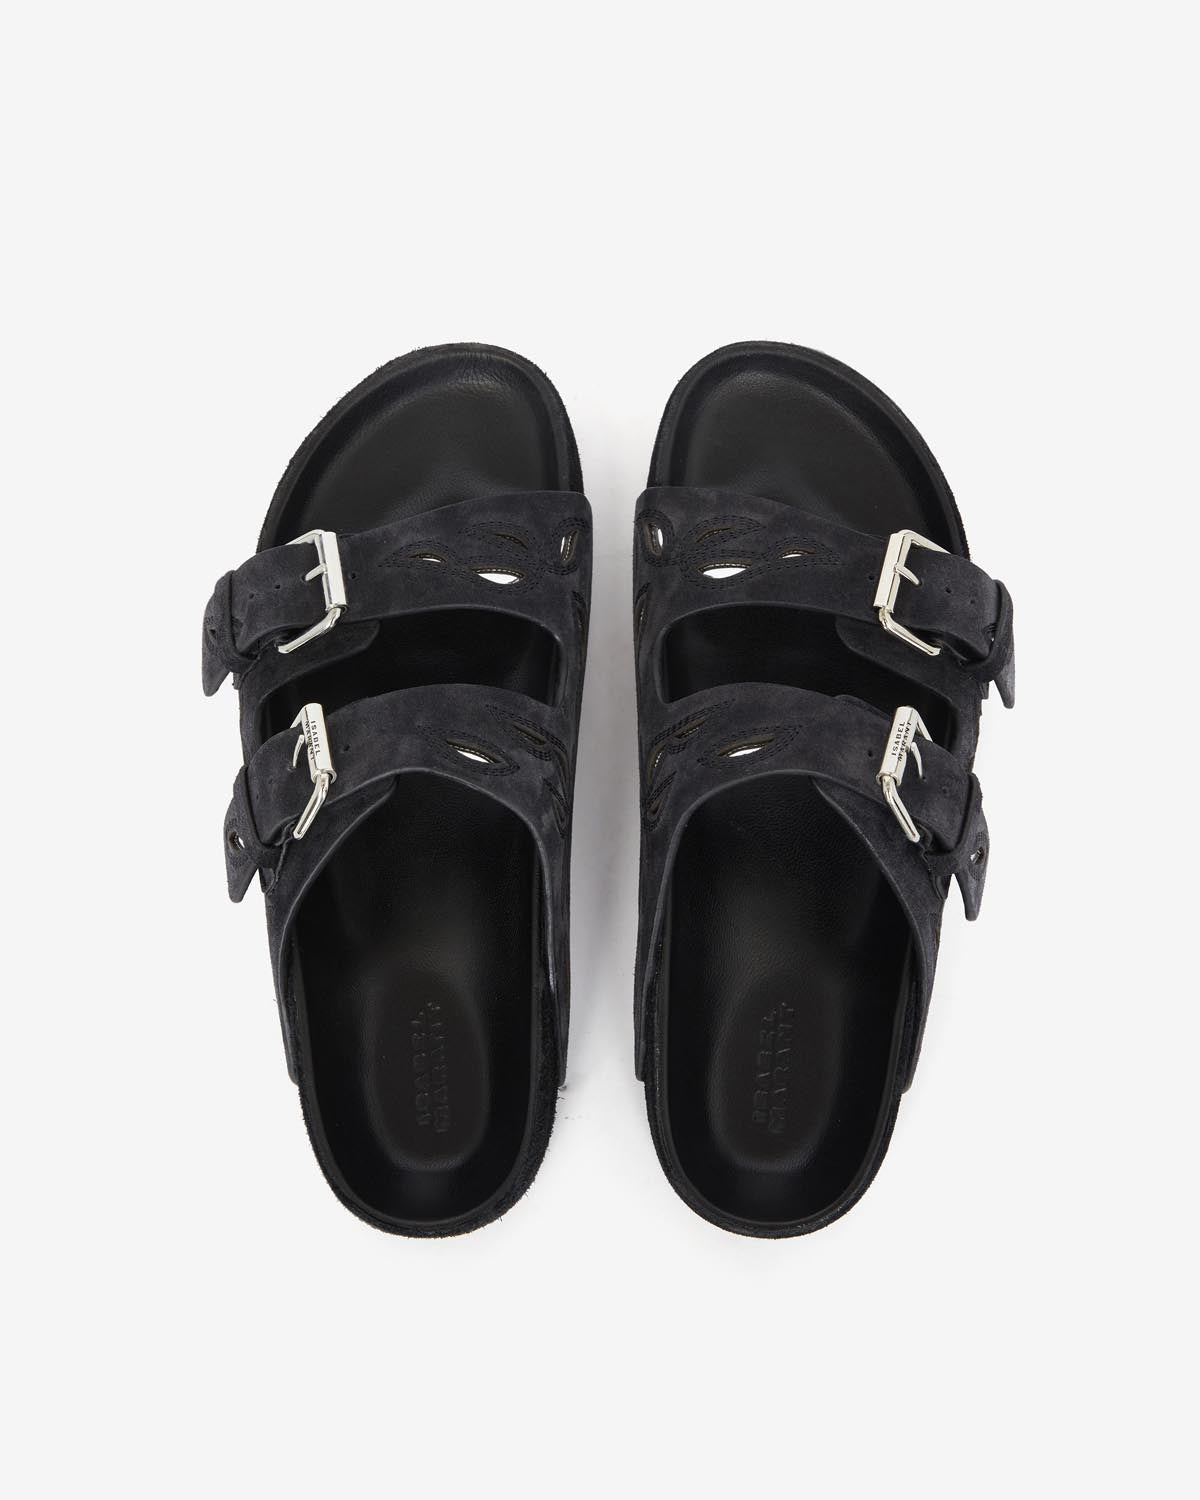 Lennyo sandals Woman Faded black-silver 3